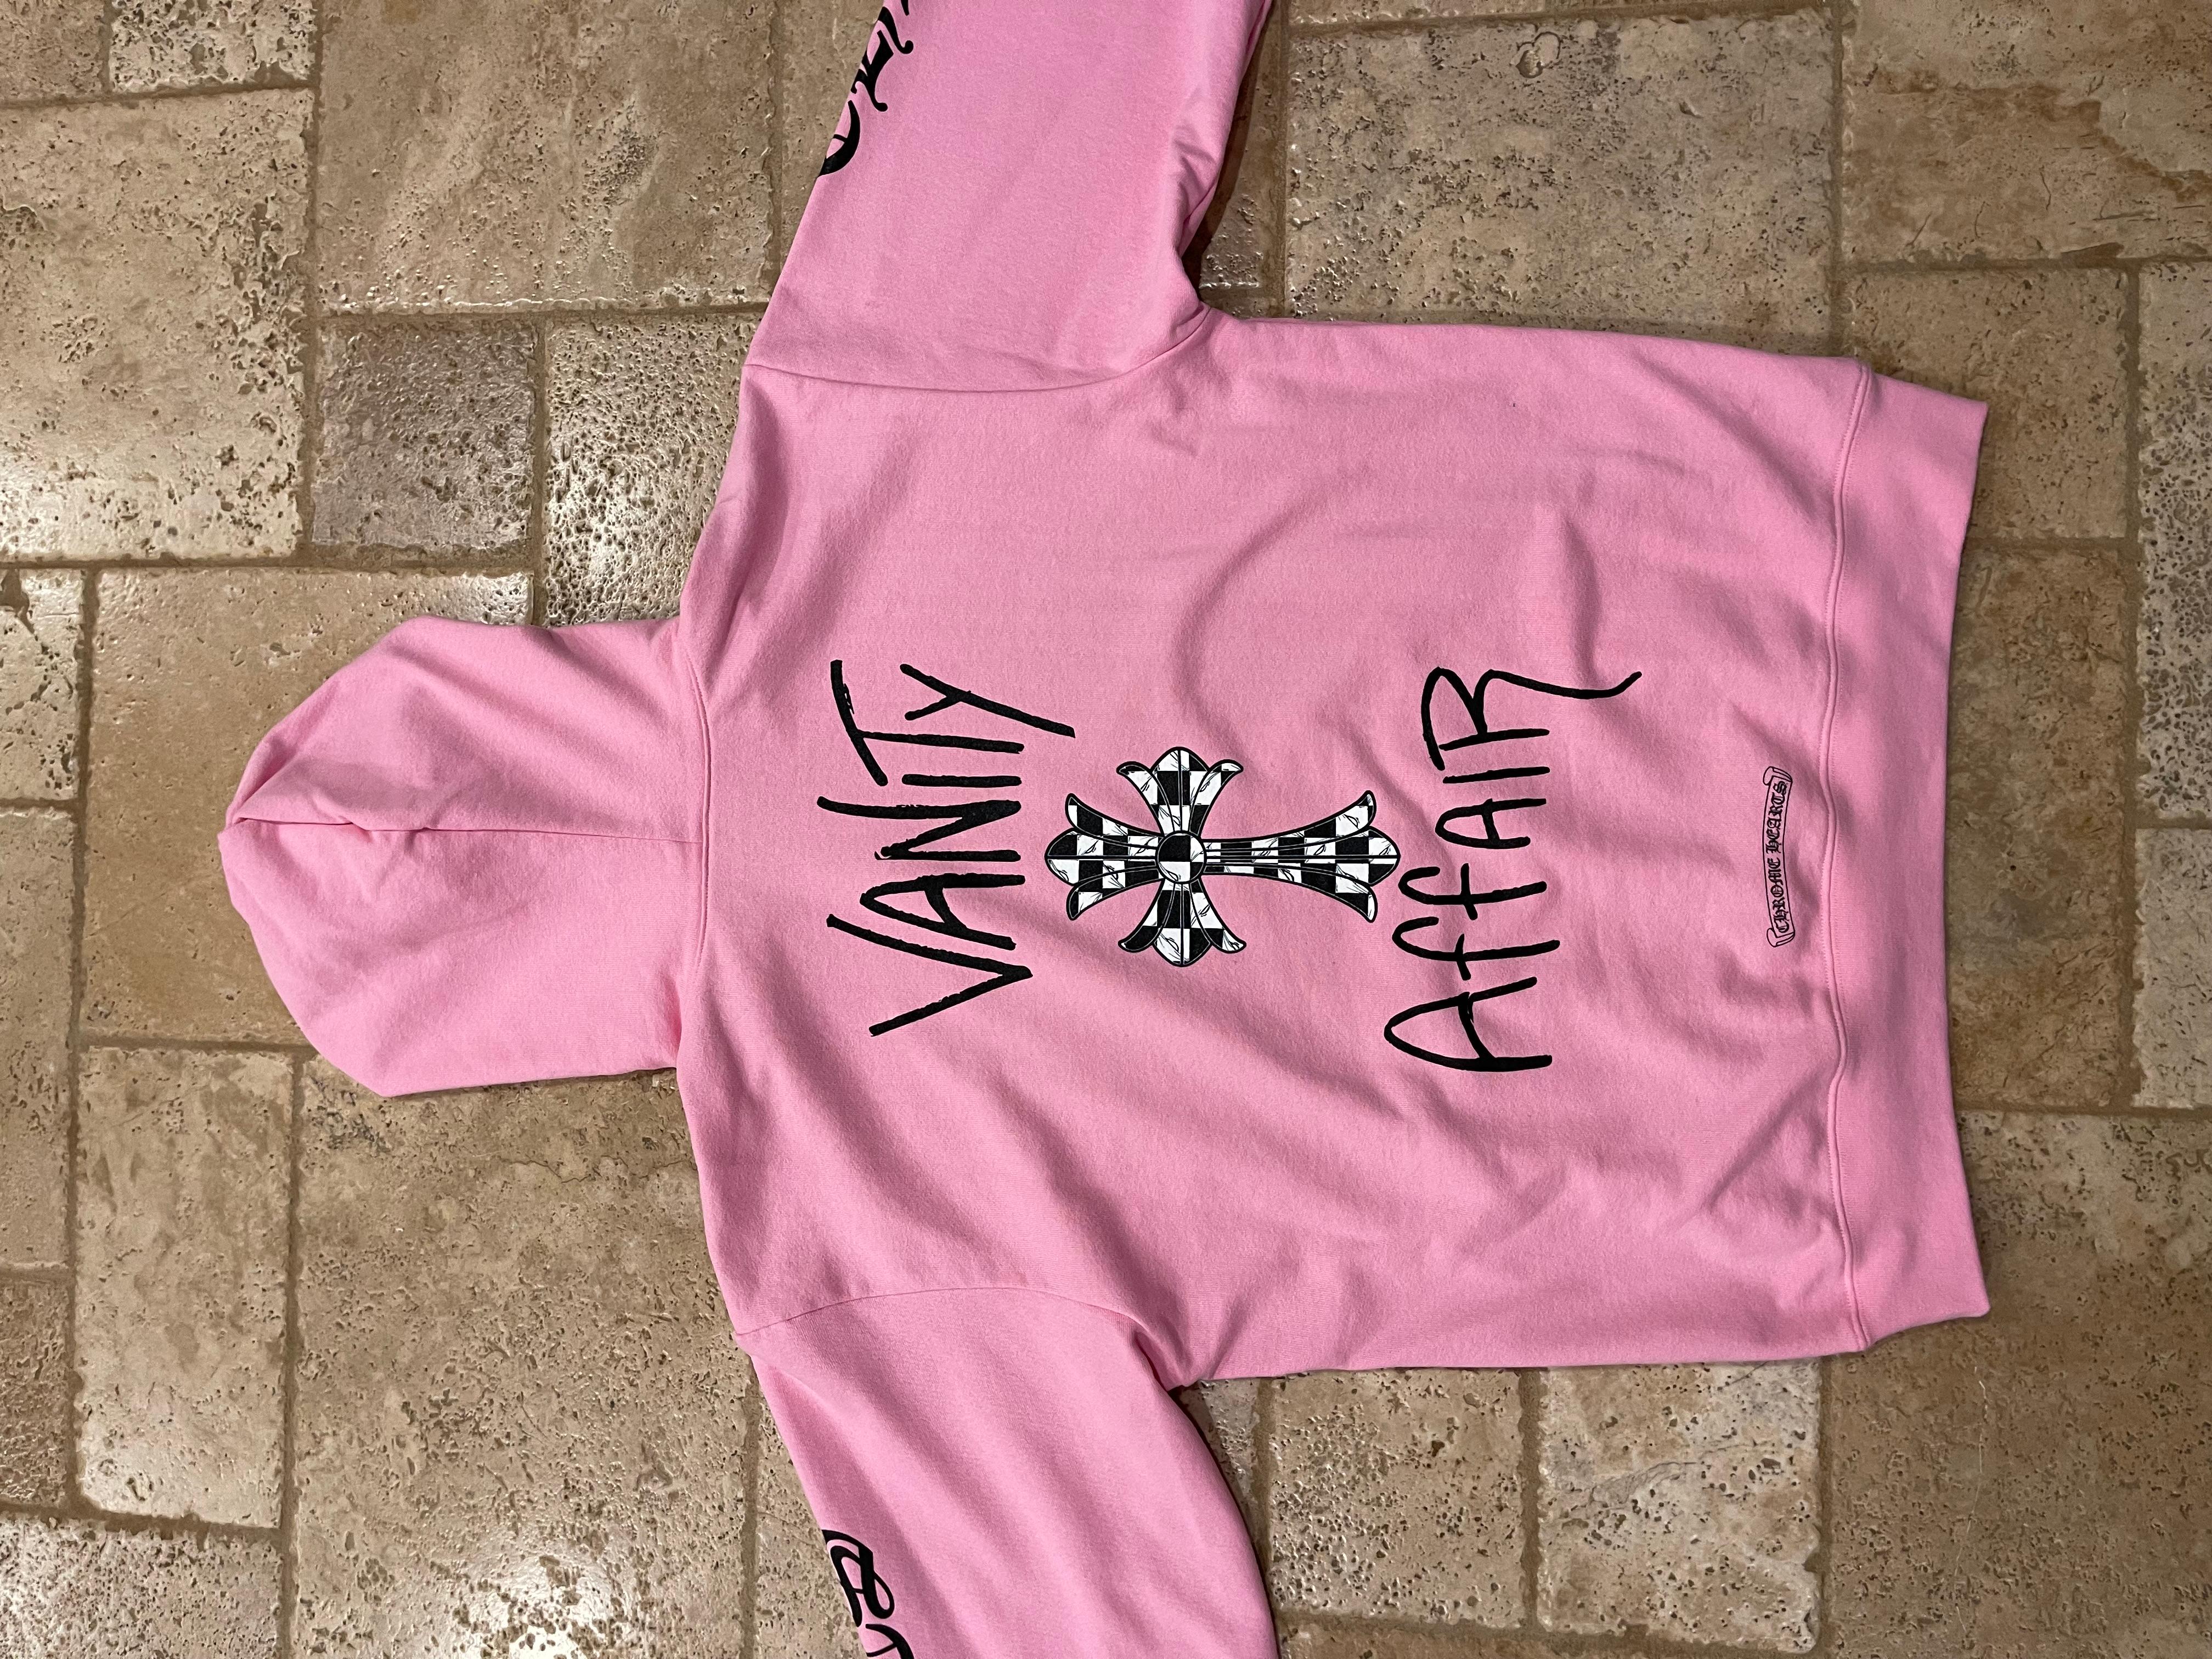 Chrome Hearts Matty Boy Vanity Affair Pink Pullover Hoodie size XL 4